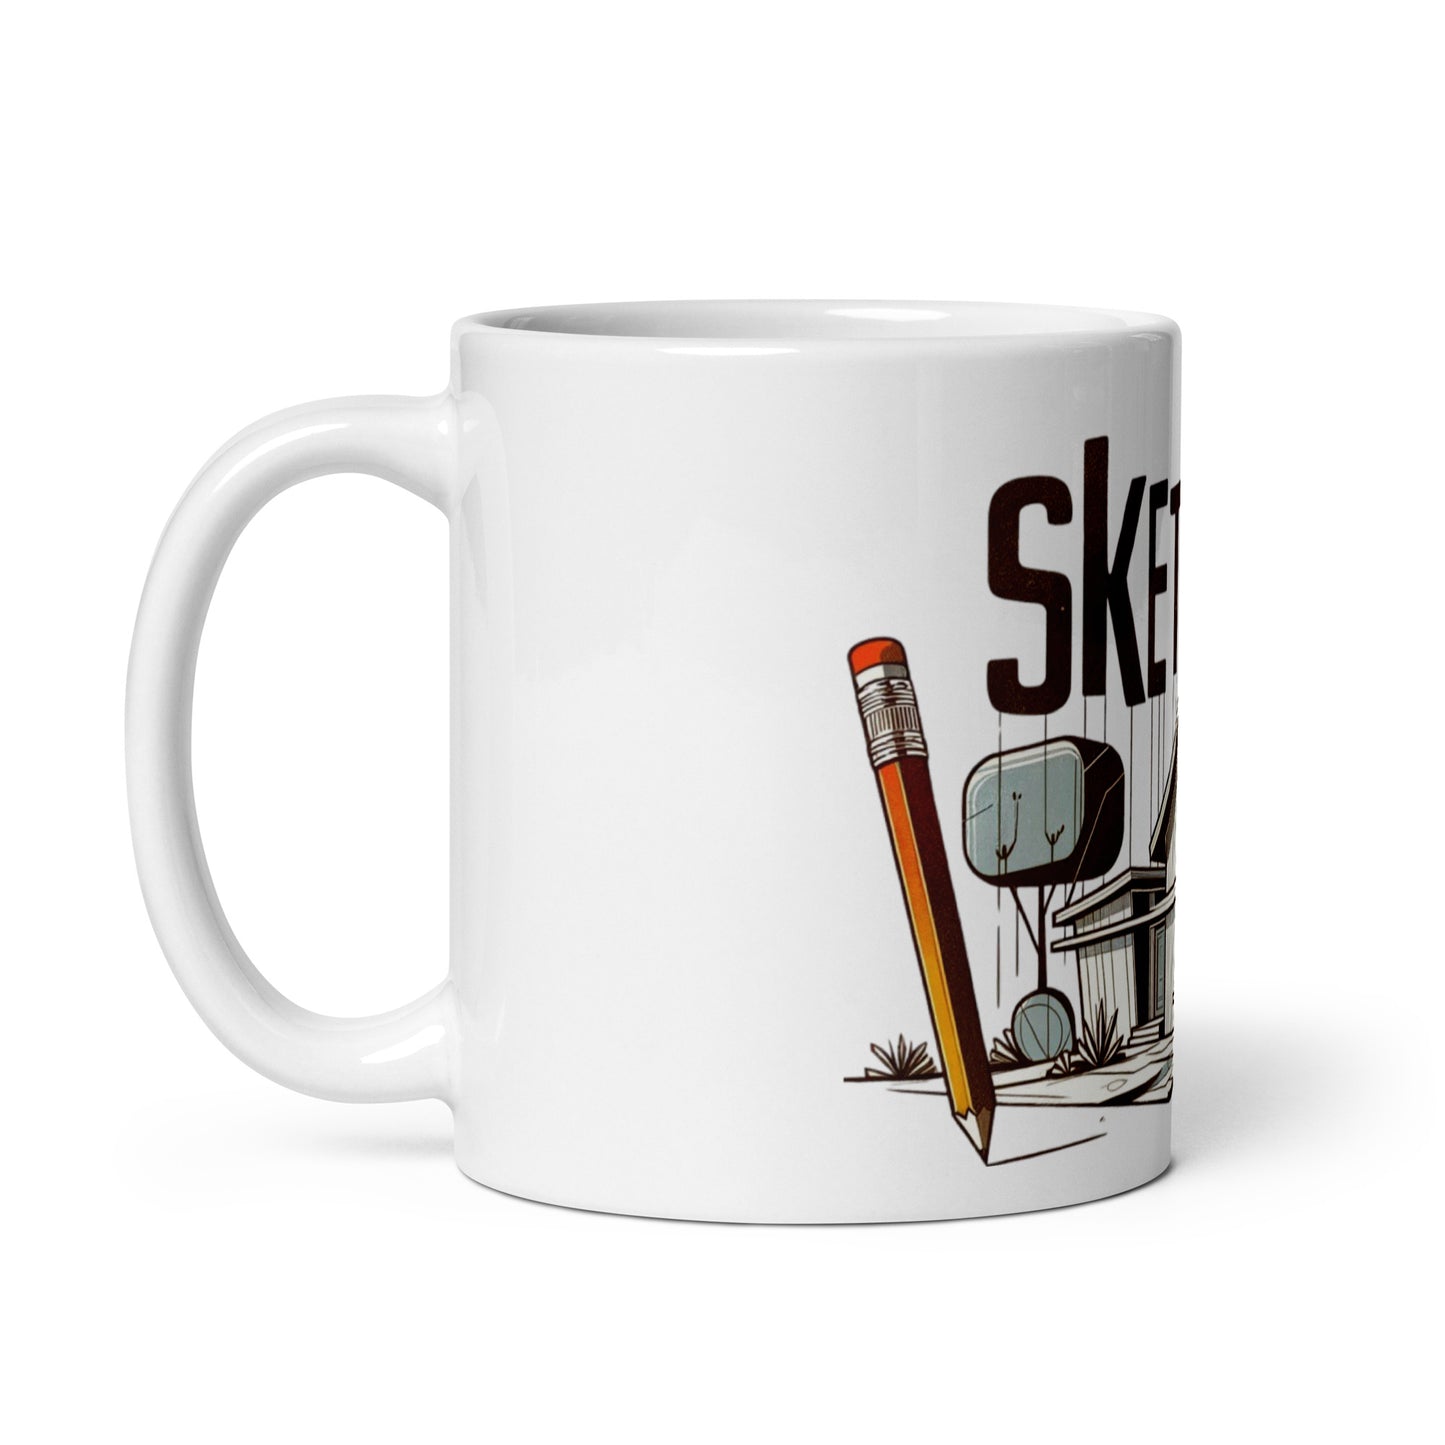 Sketchy House White glossy mug